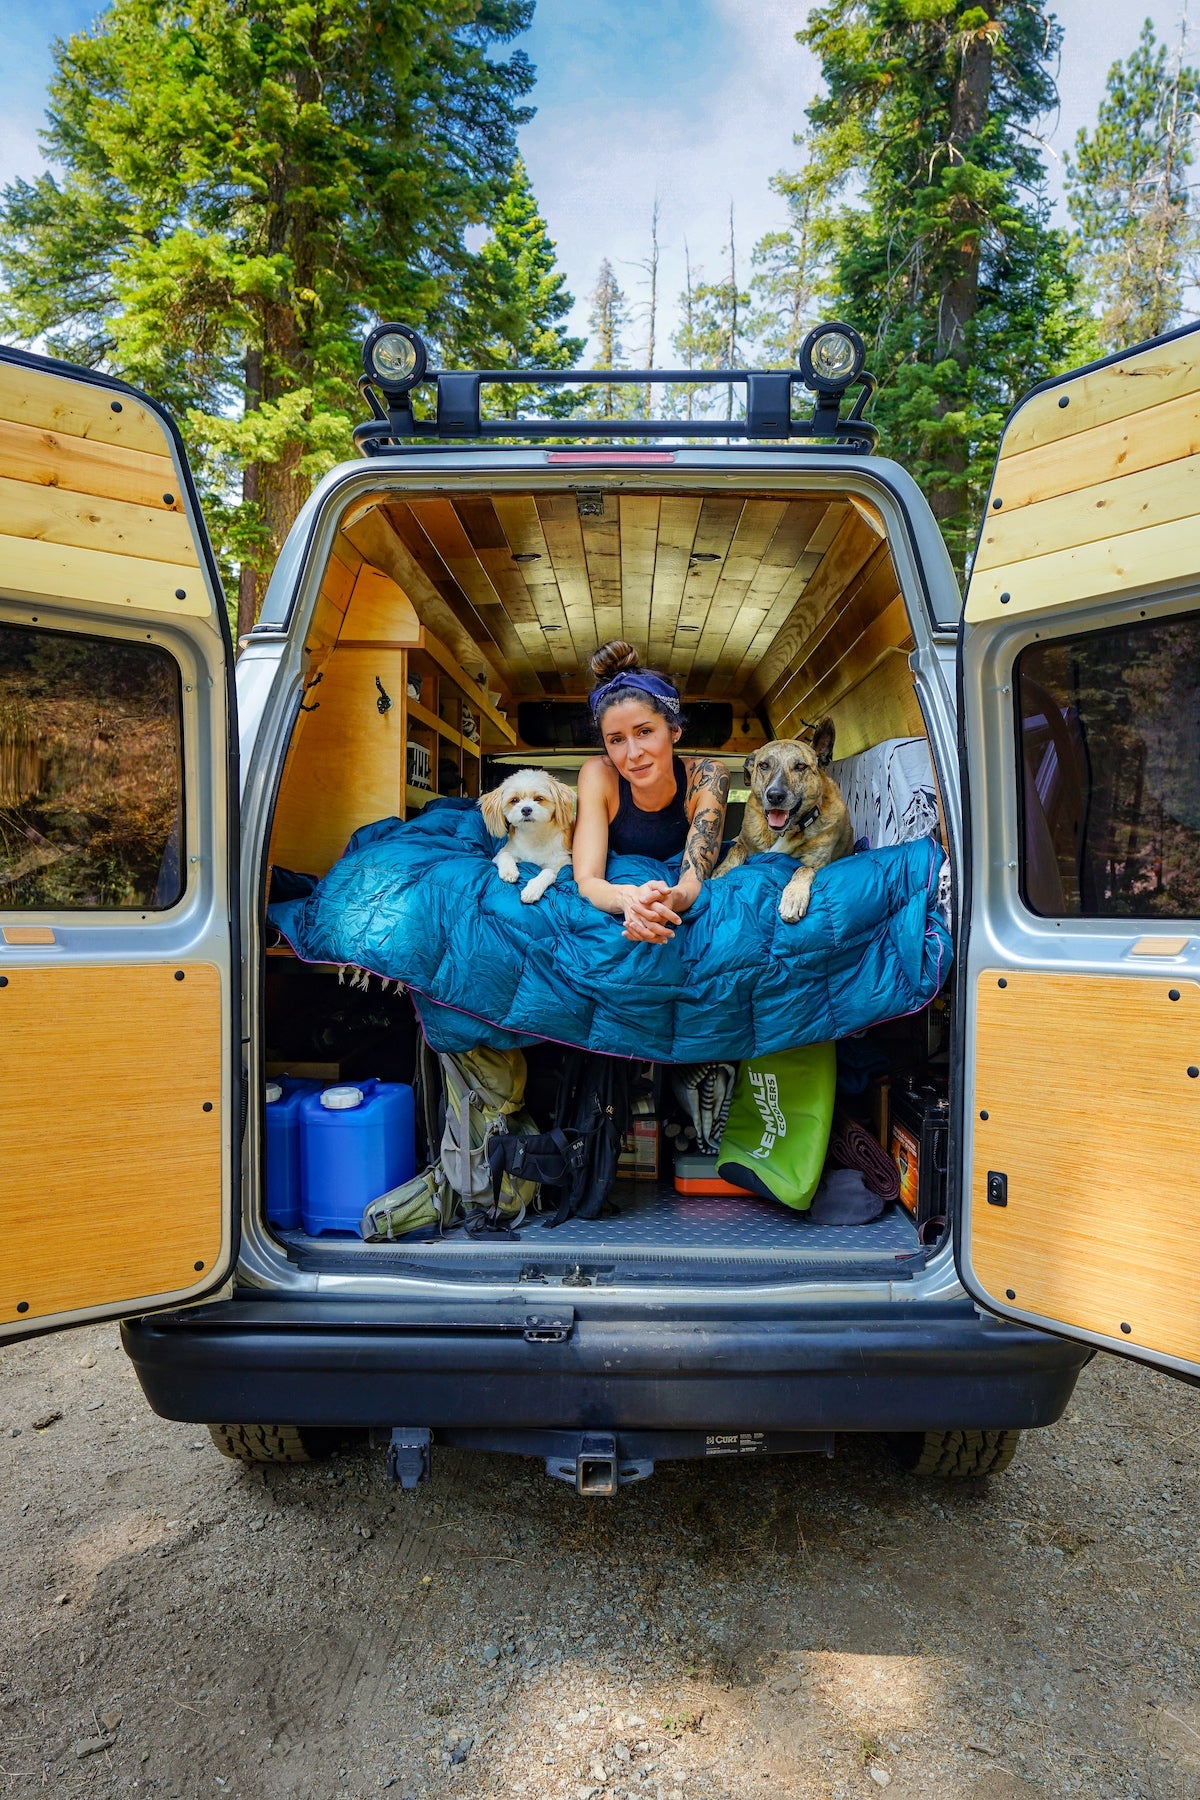 Noel and her dogs in the back of her camper van